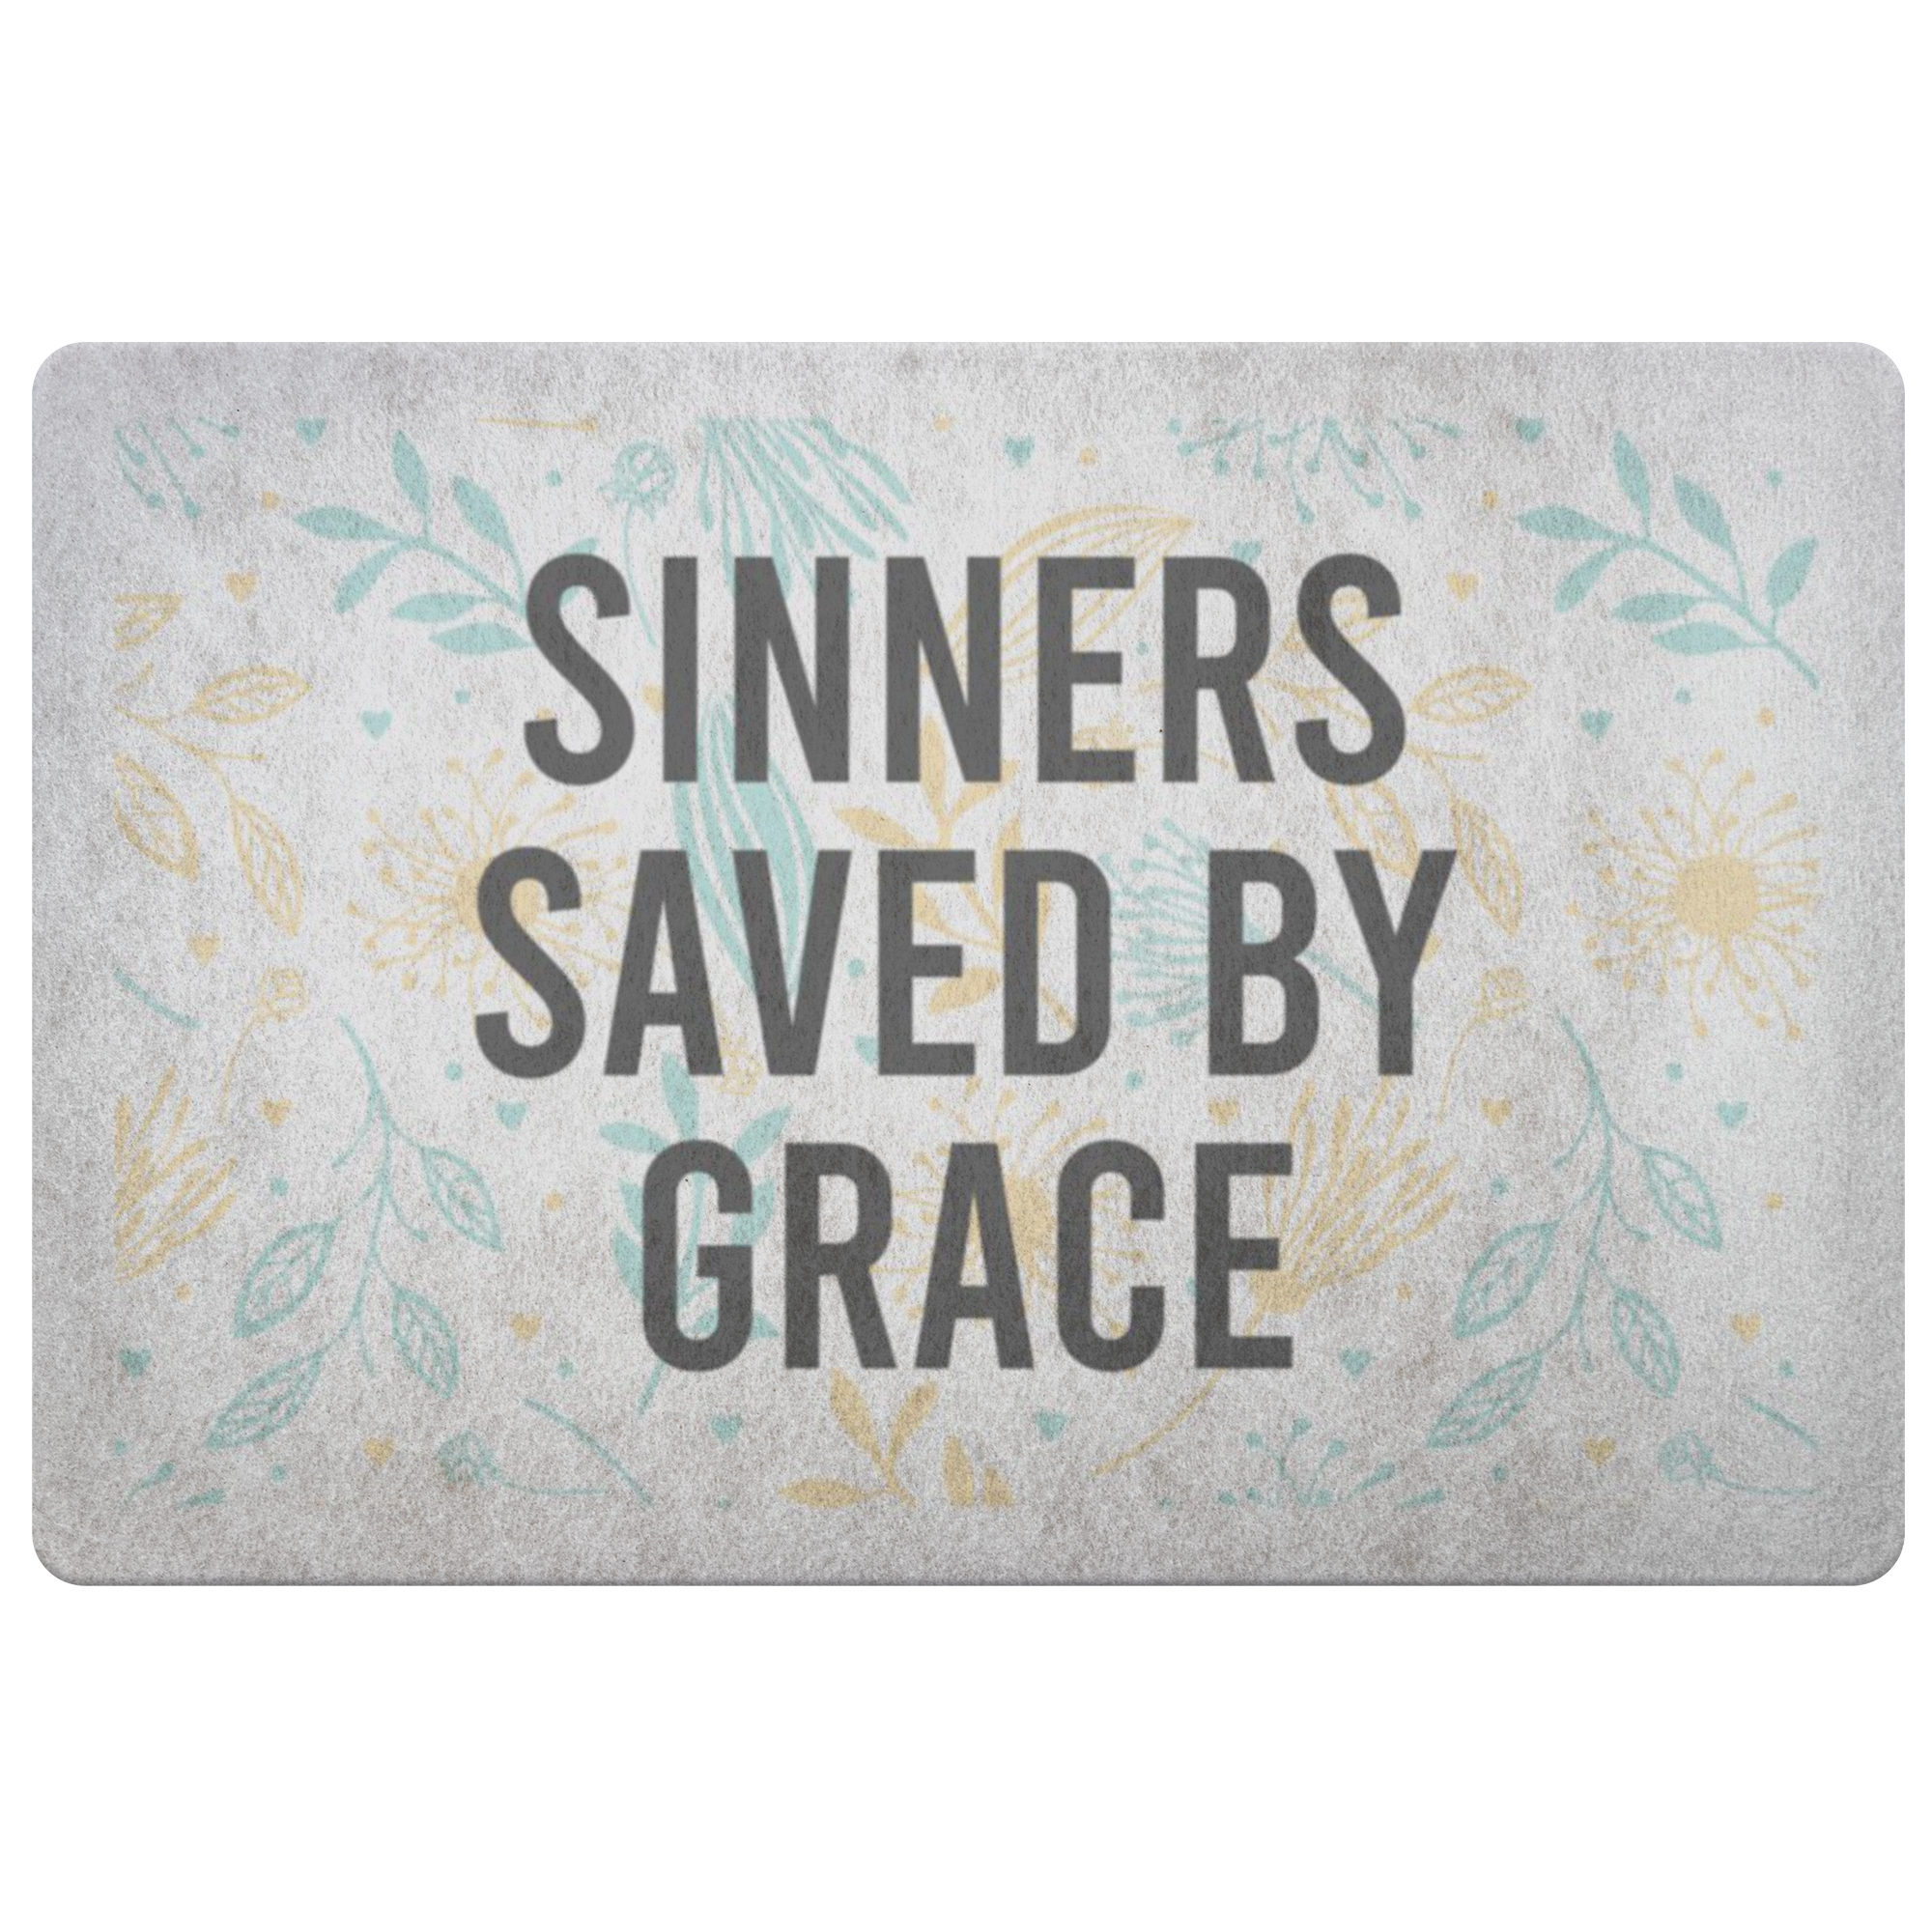 Sinners Saved By Grace (Doormat)